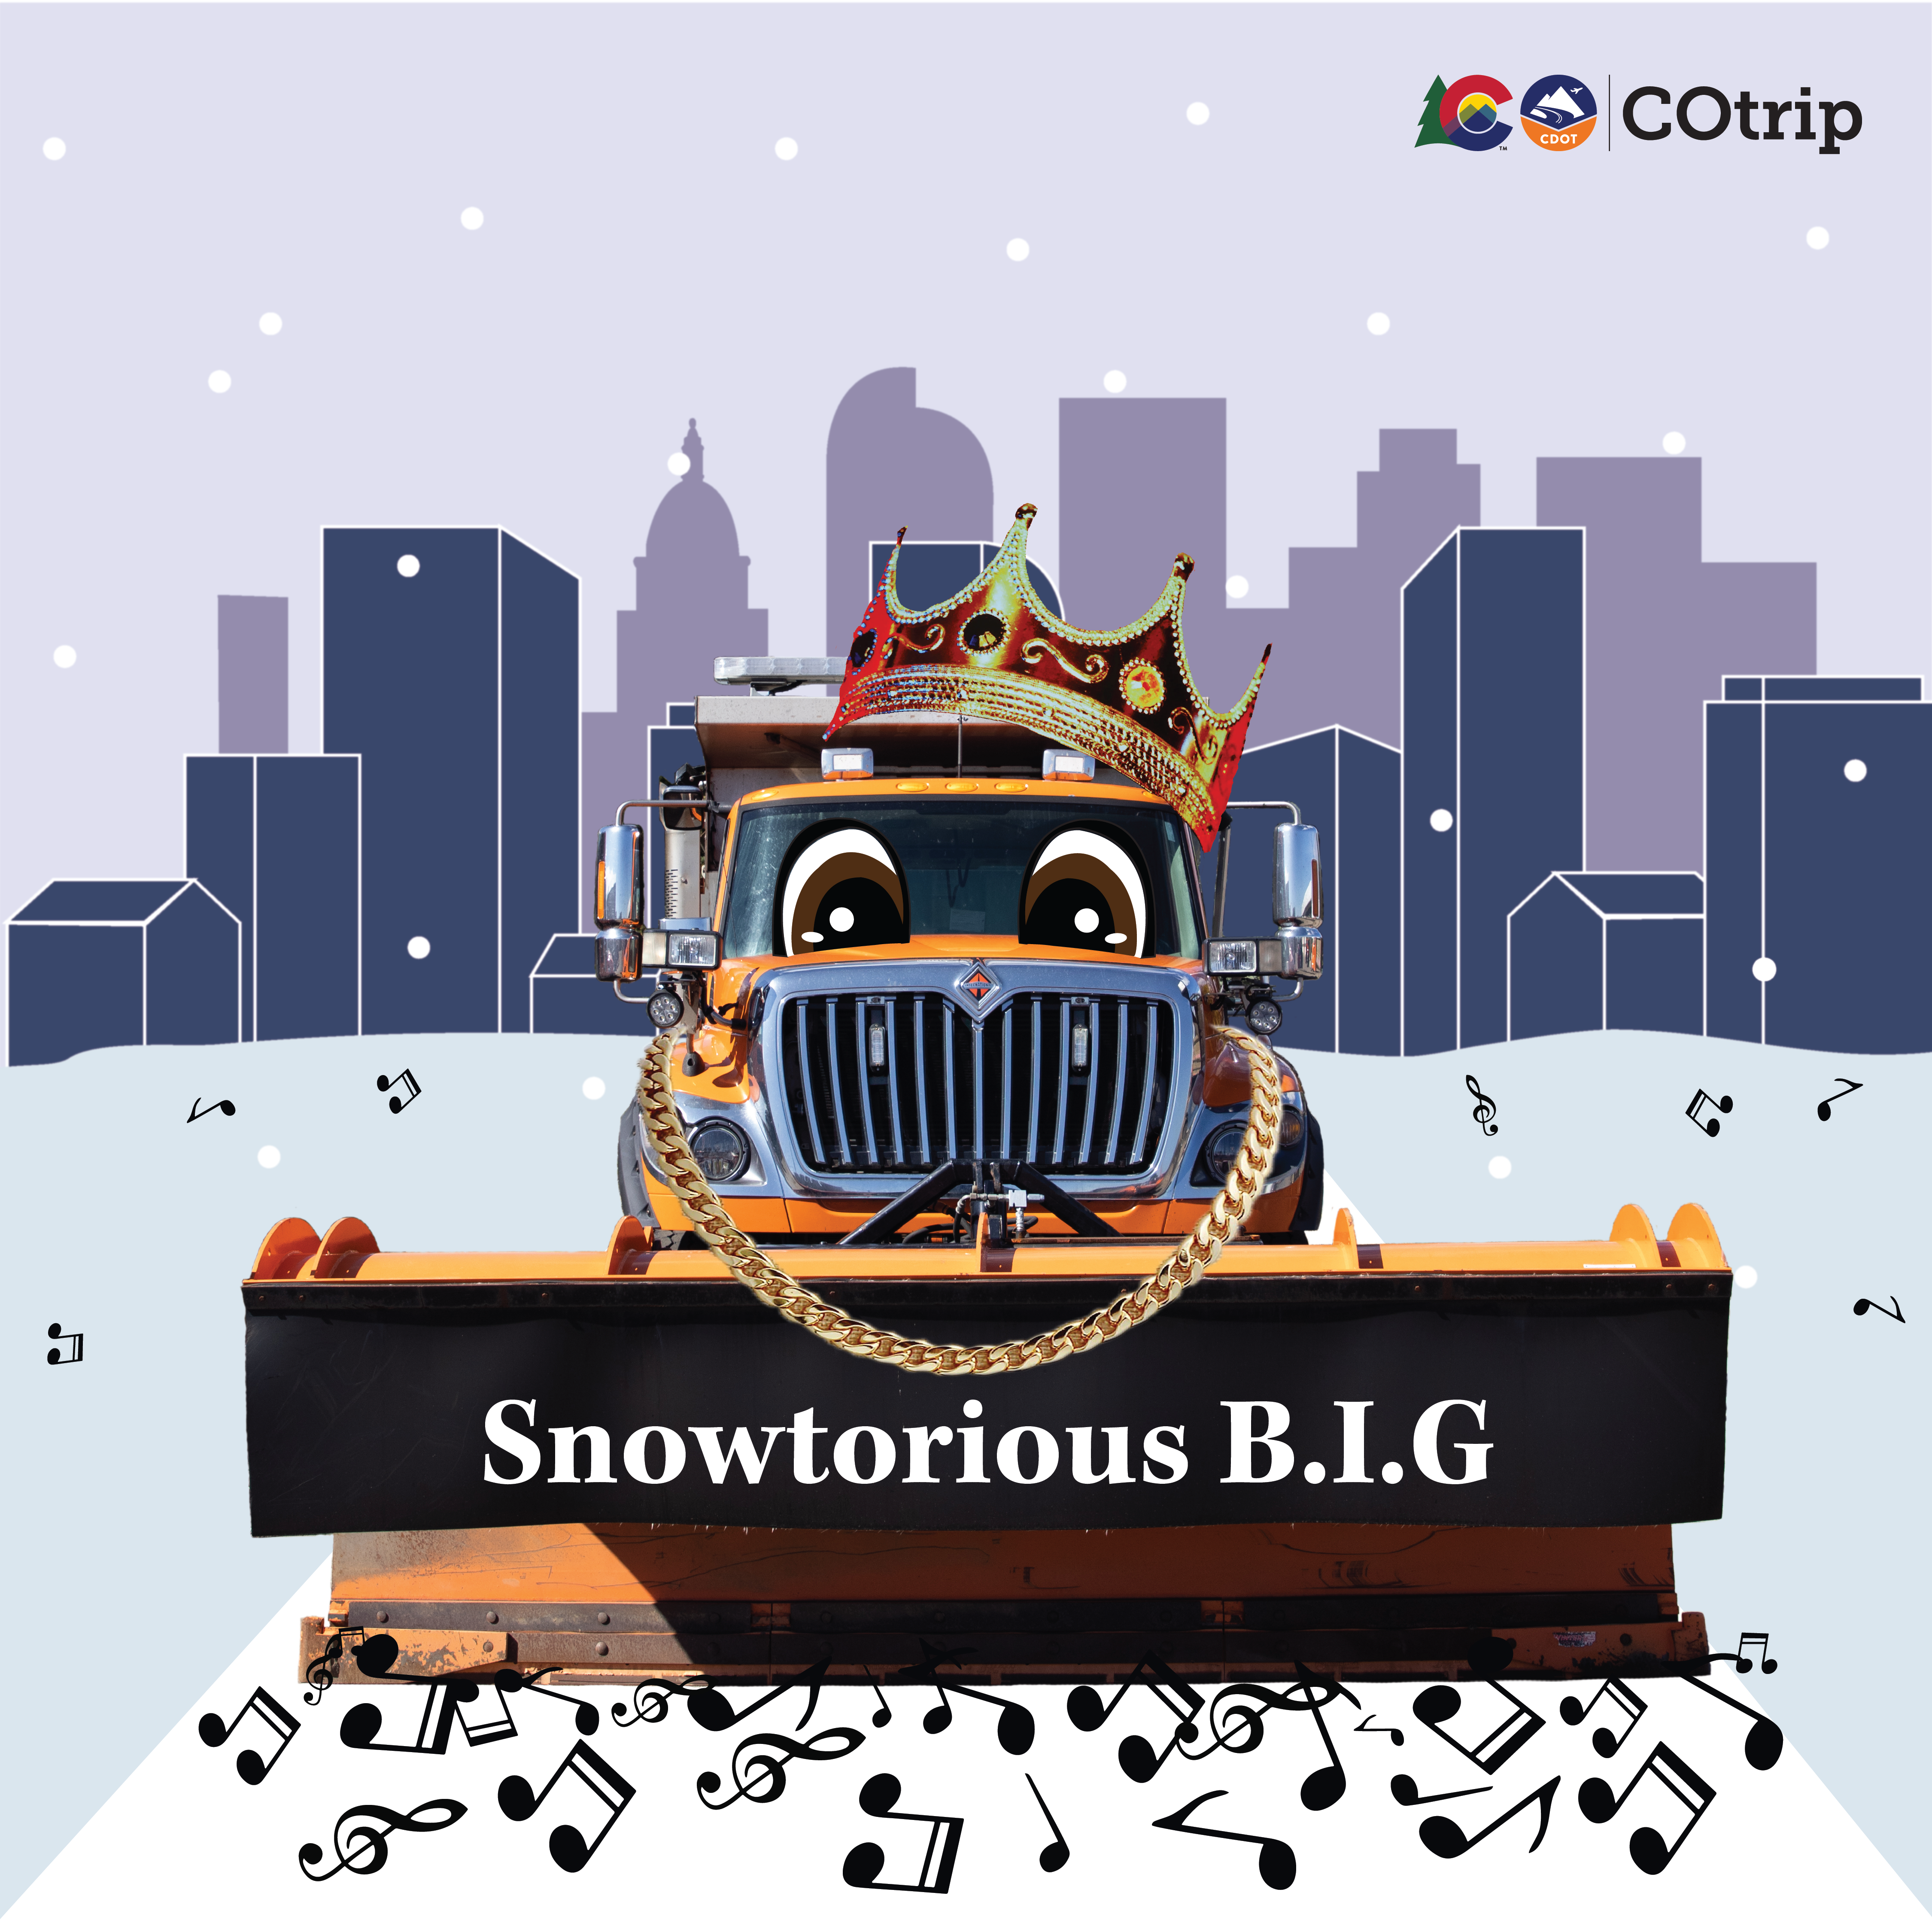 Snowtorious B.I.G Snowplow detail image